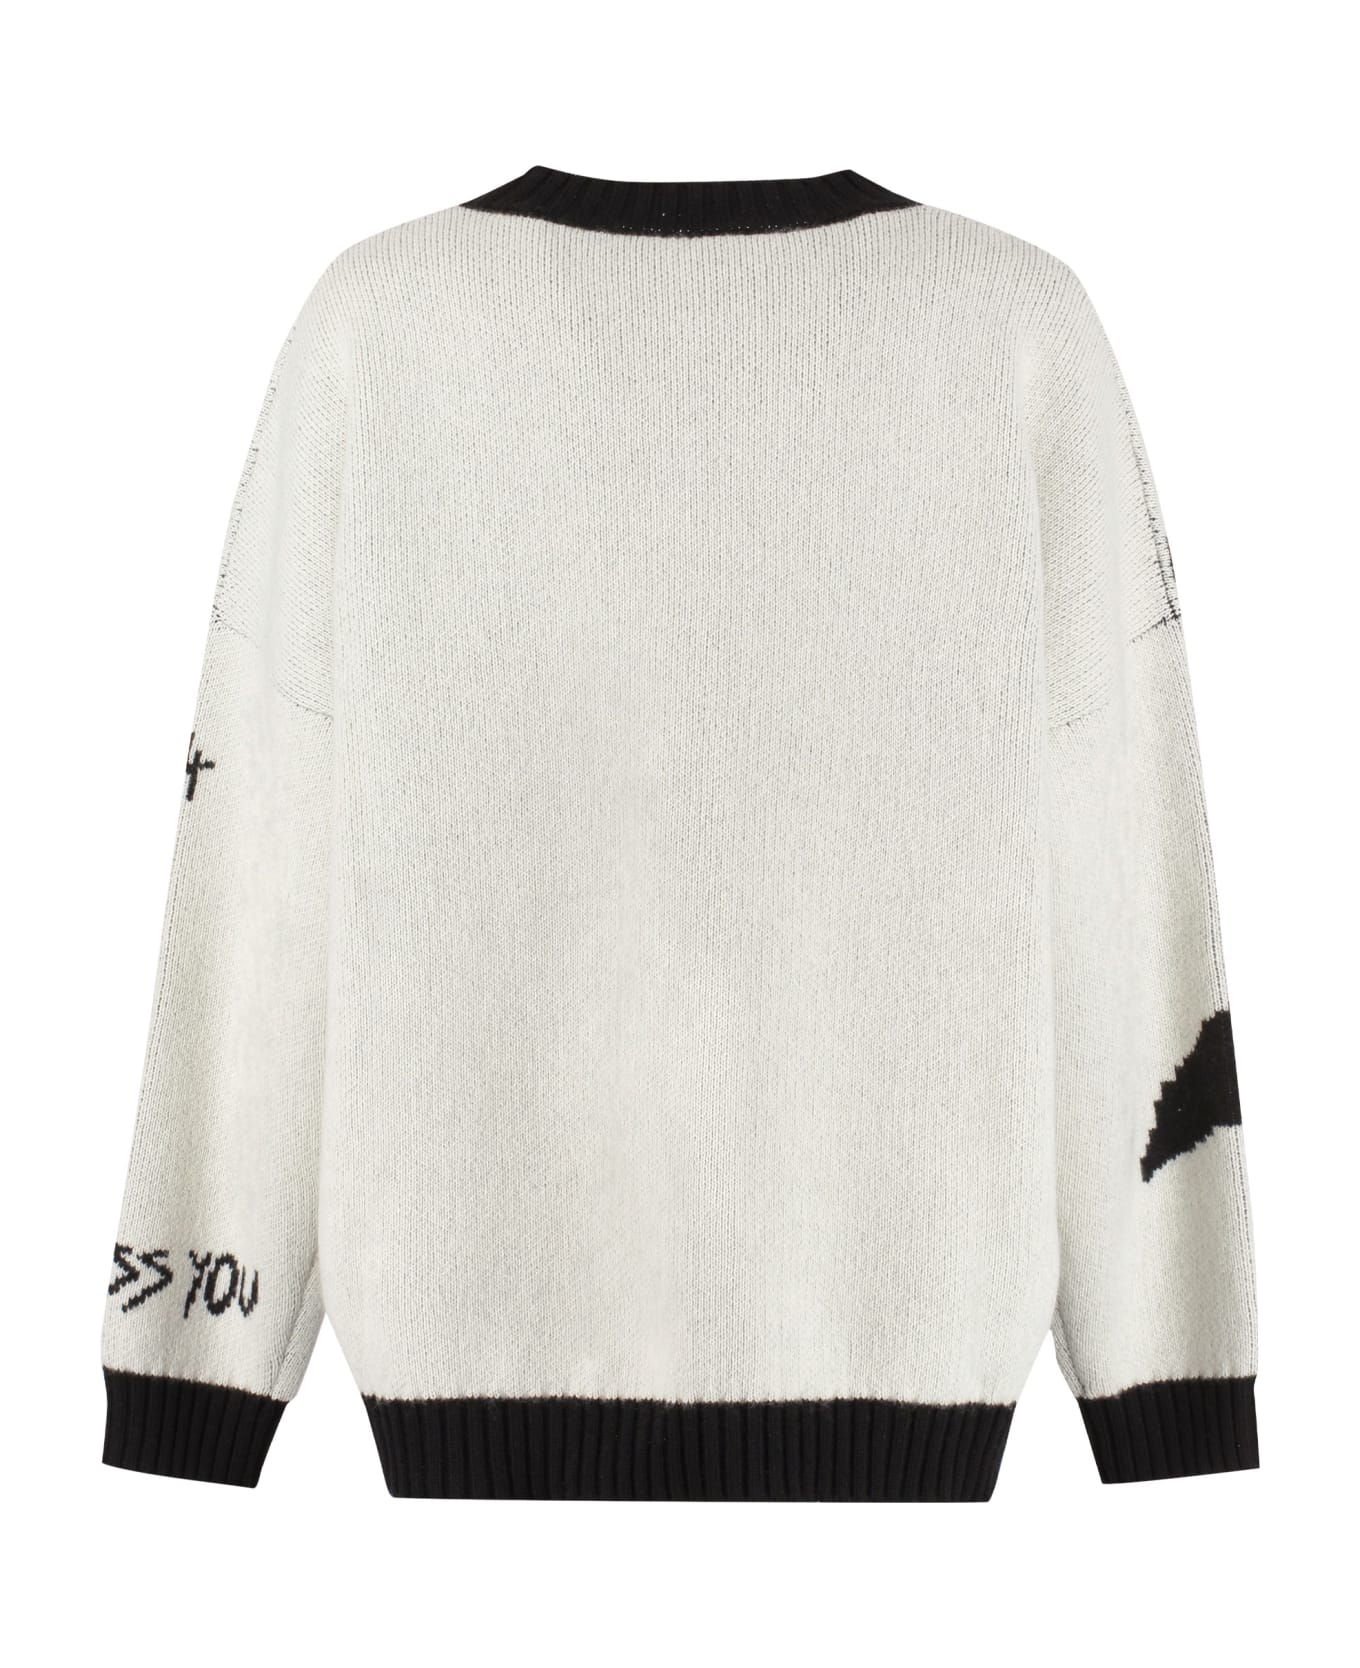 Philosophy di Lorenzo Serafini Oversize Virgin Wool Sweater - Ivory